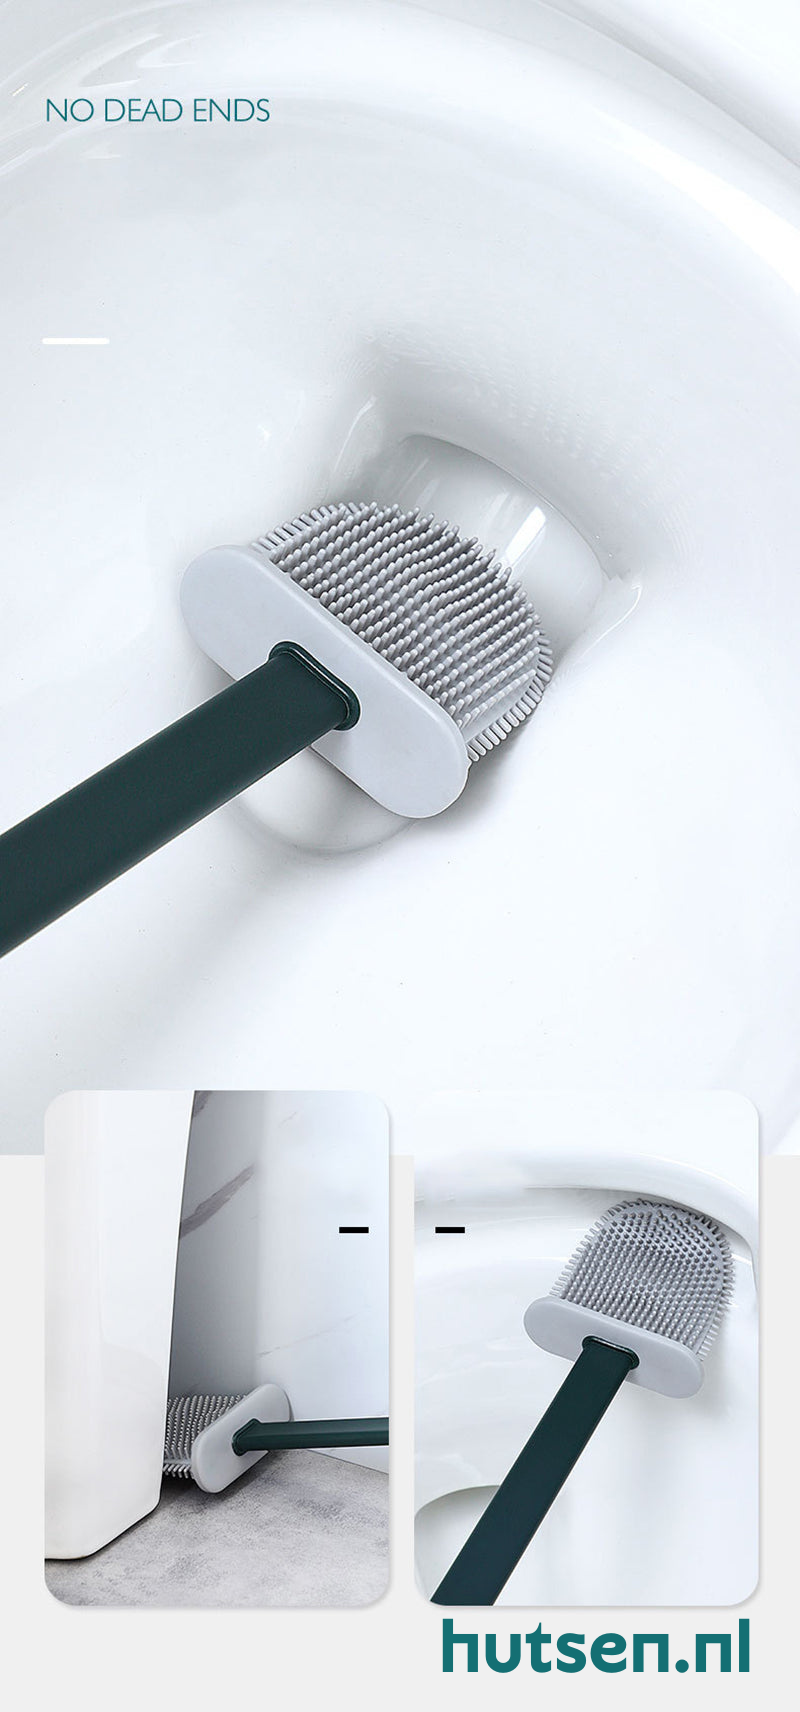 Cleaner Pro° Brush - Siliconen Toiletborstel